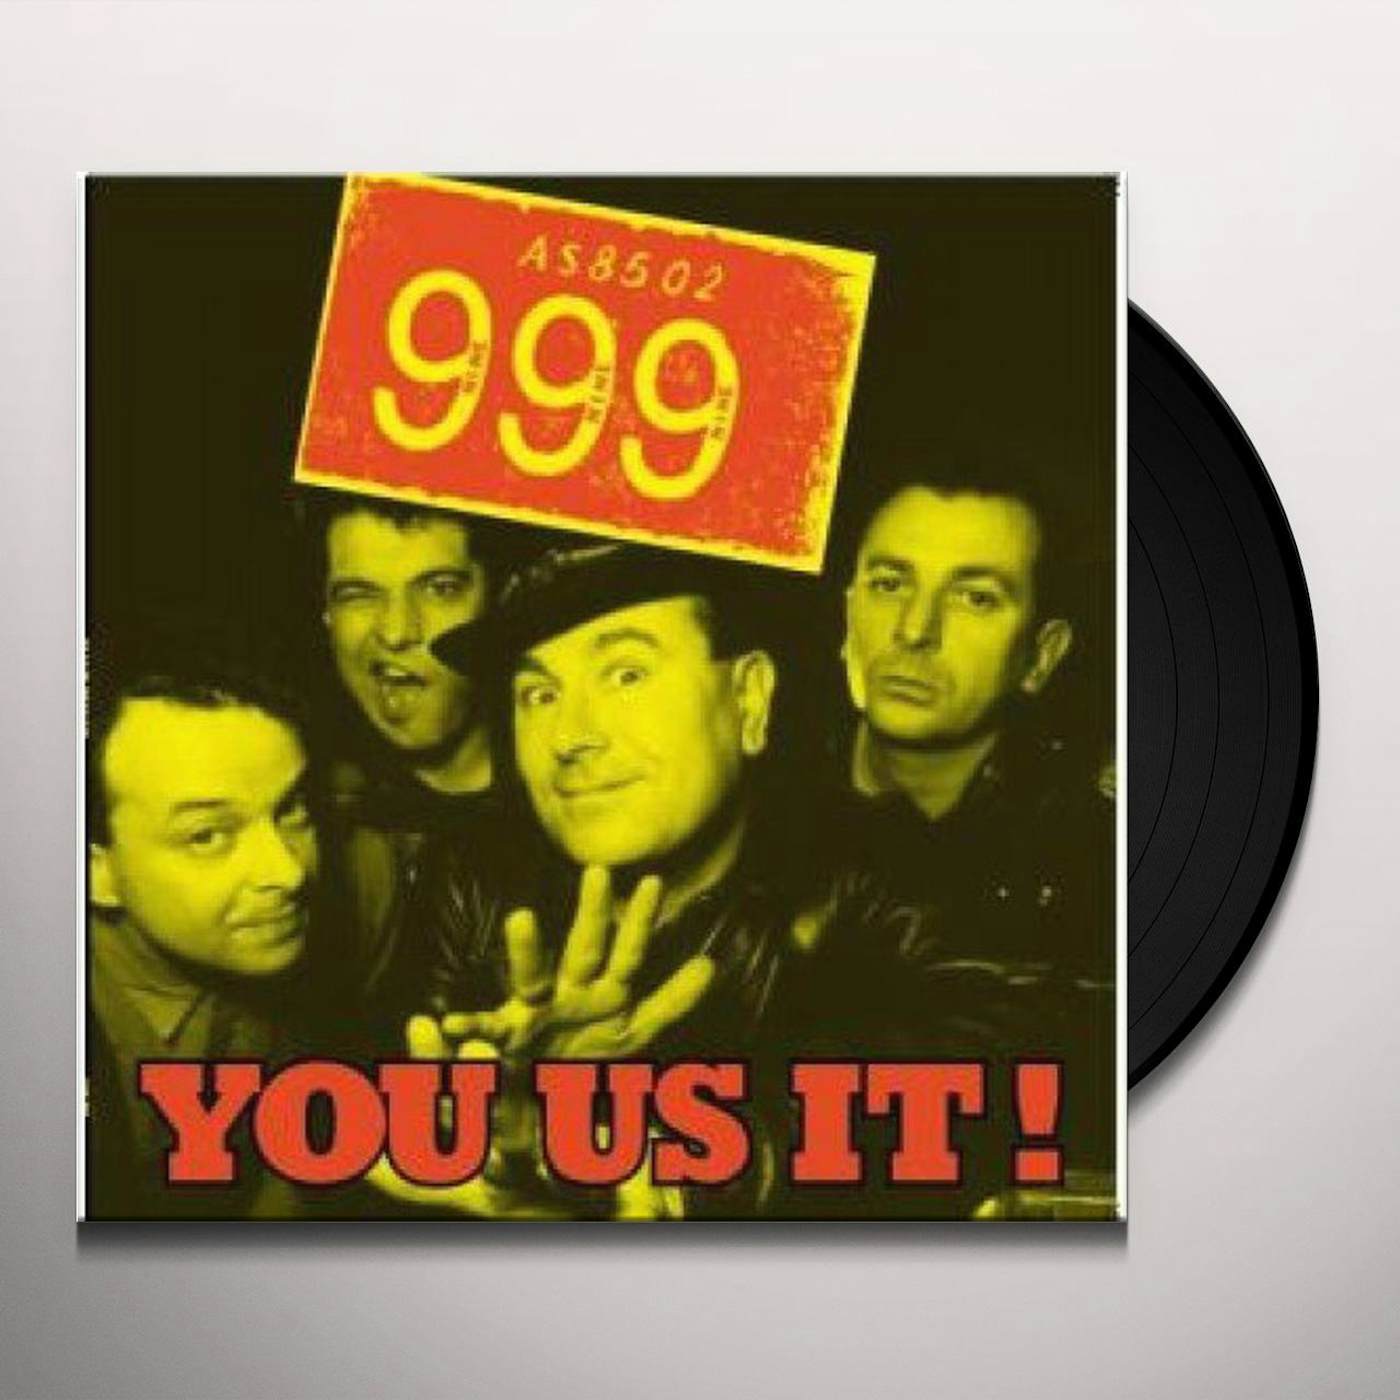 999 YOU US IT Vinyl Record